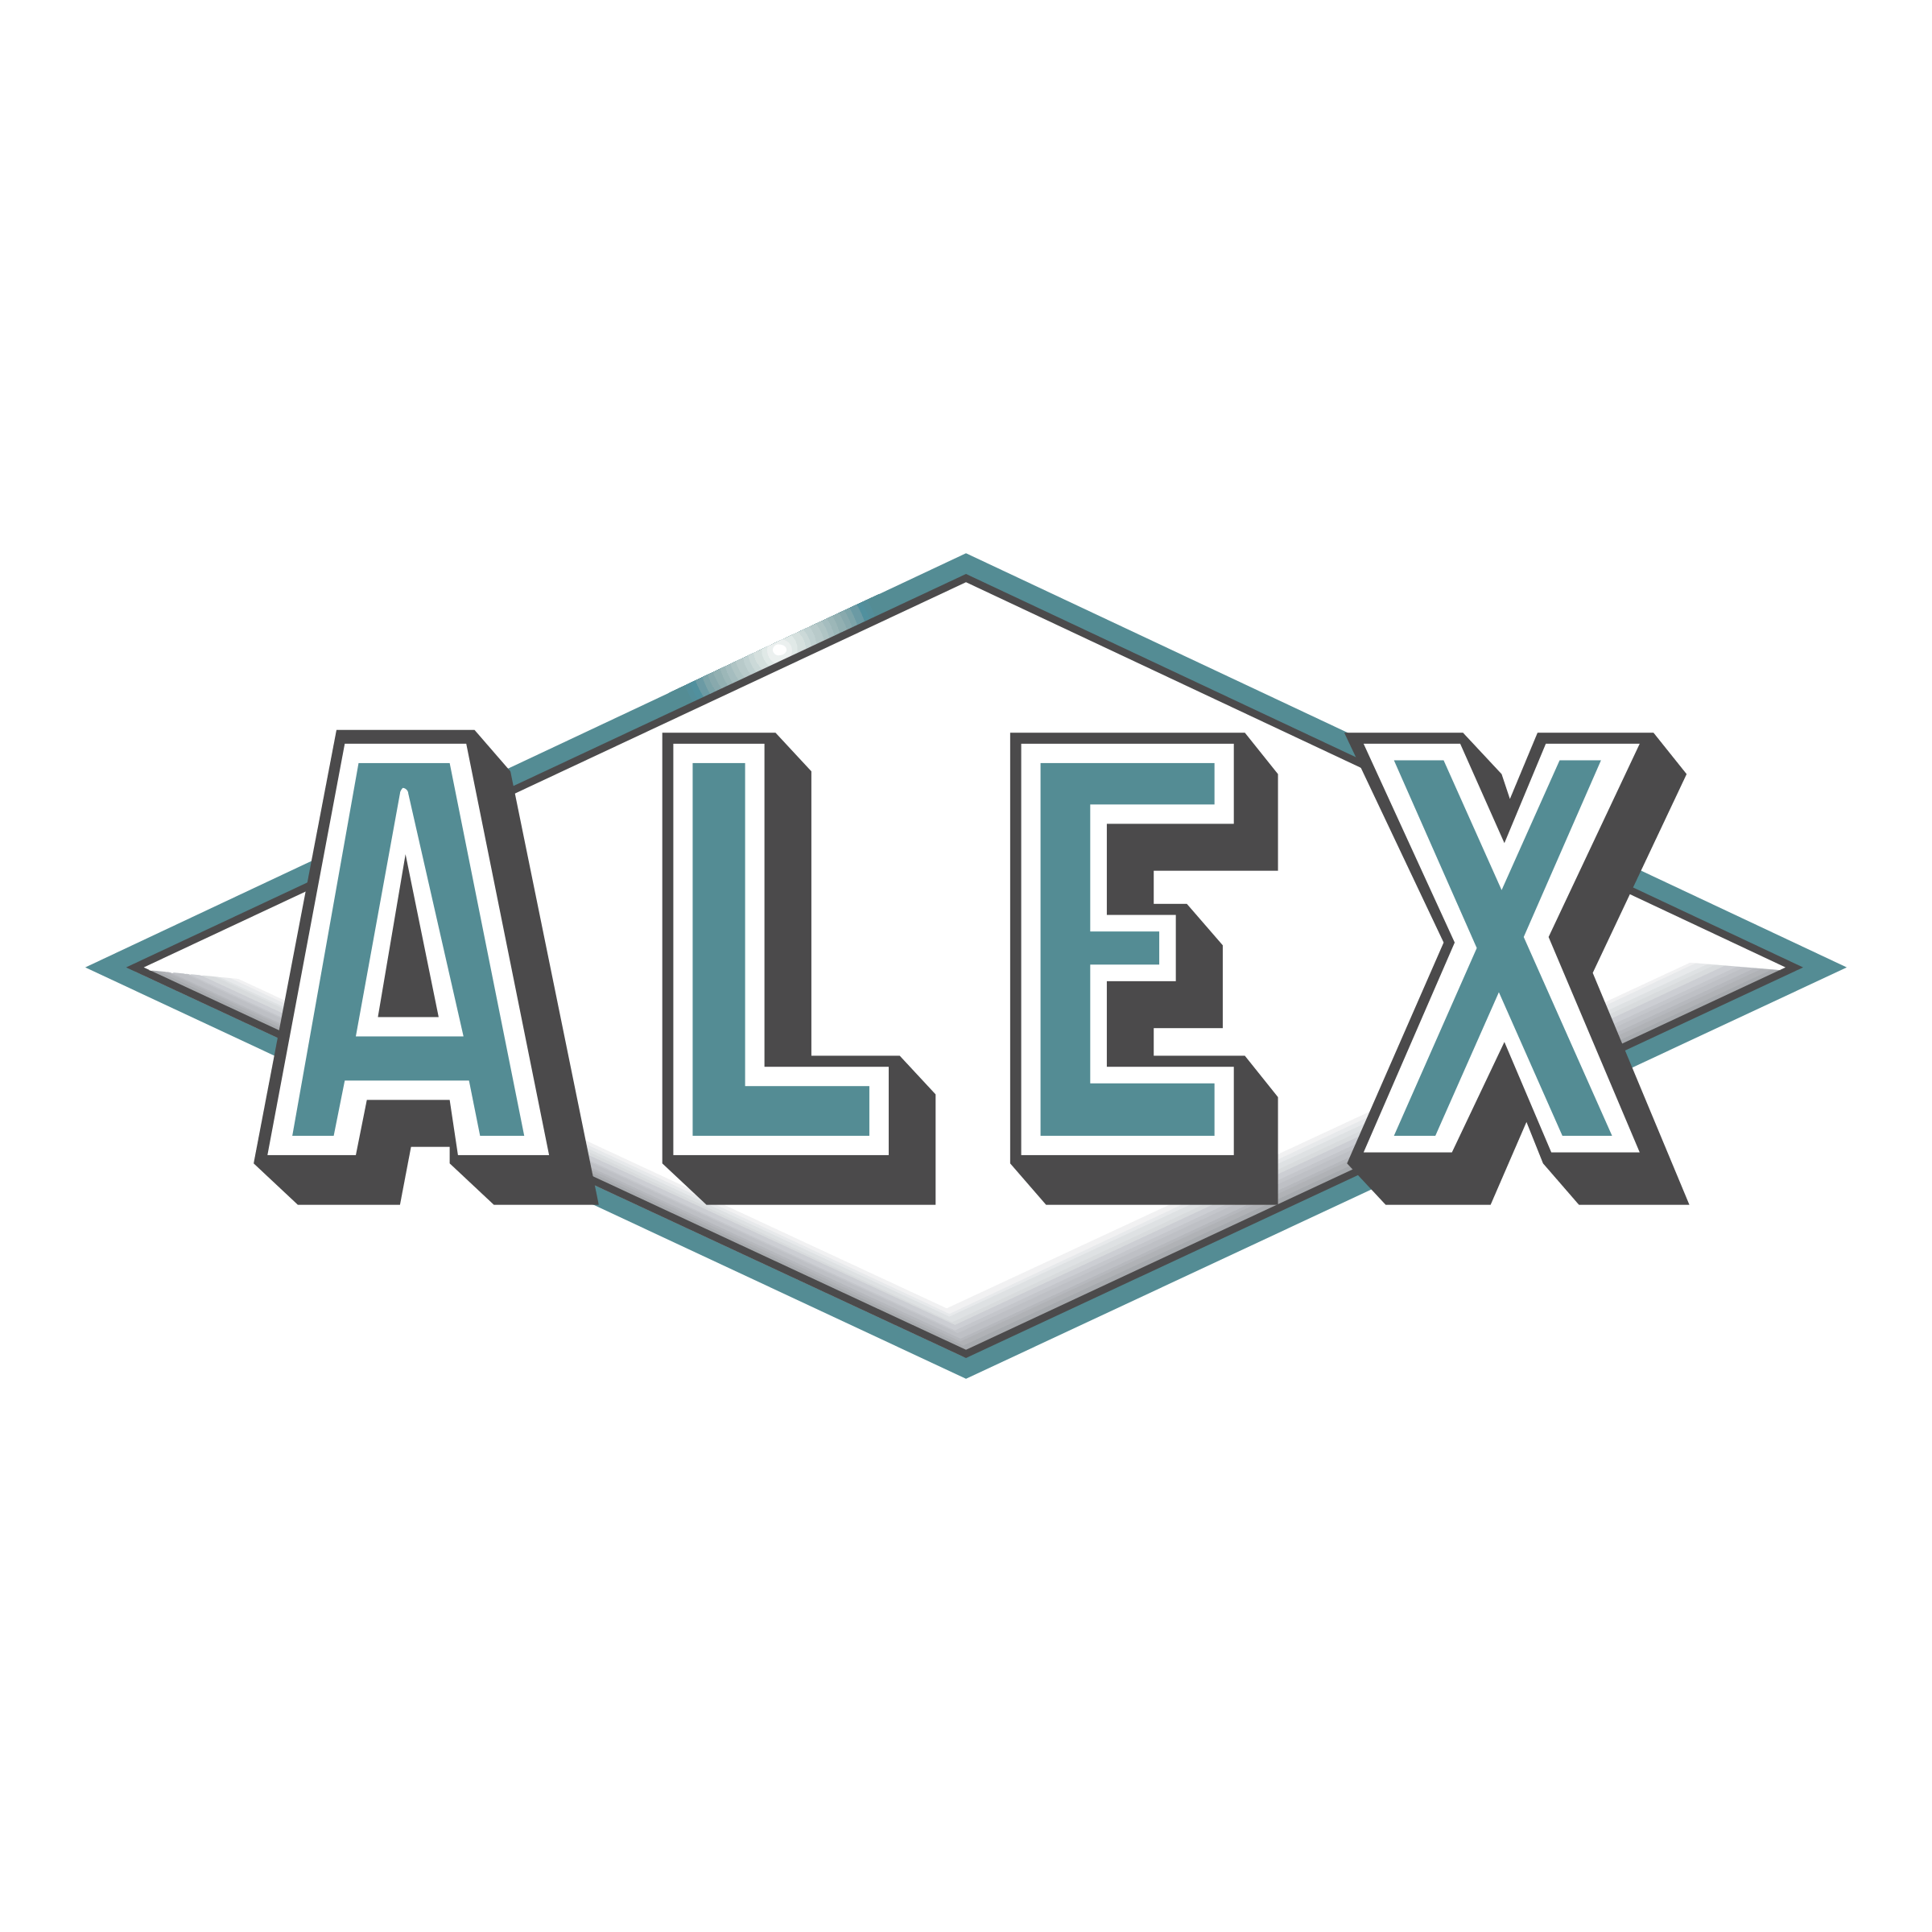 Alex Logo - Alex 01 Logo PNG Transparent & SVG Vector - Freebie Supply